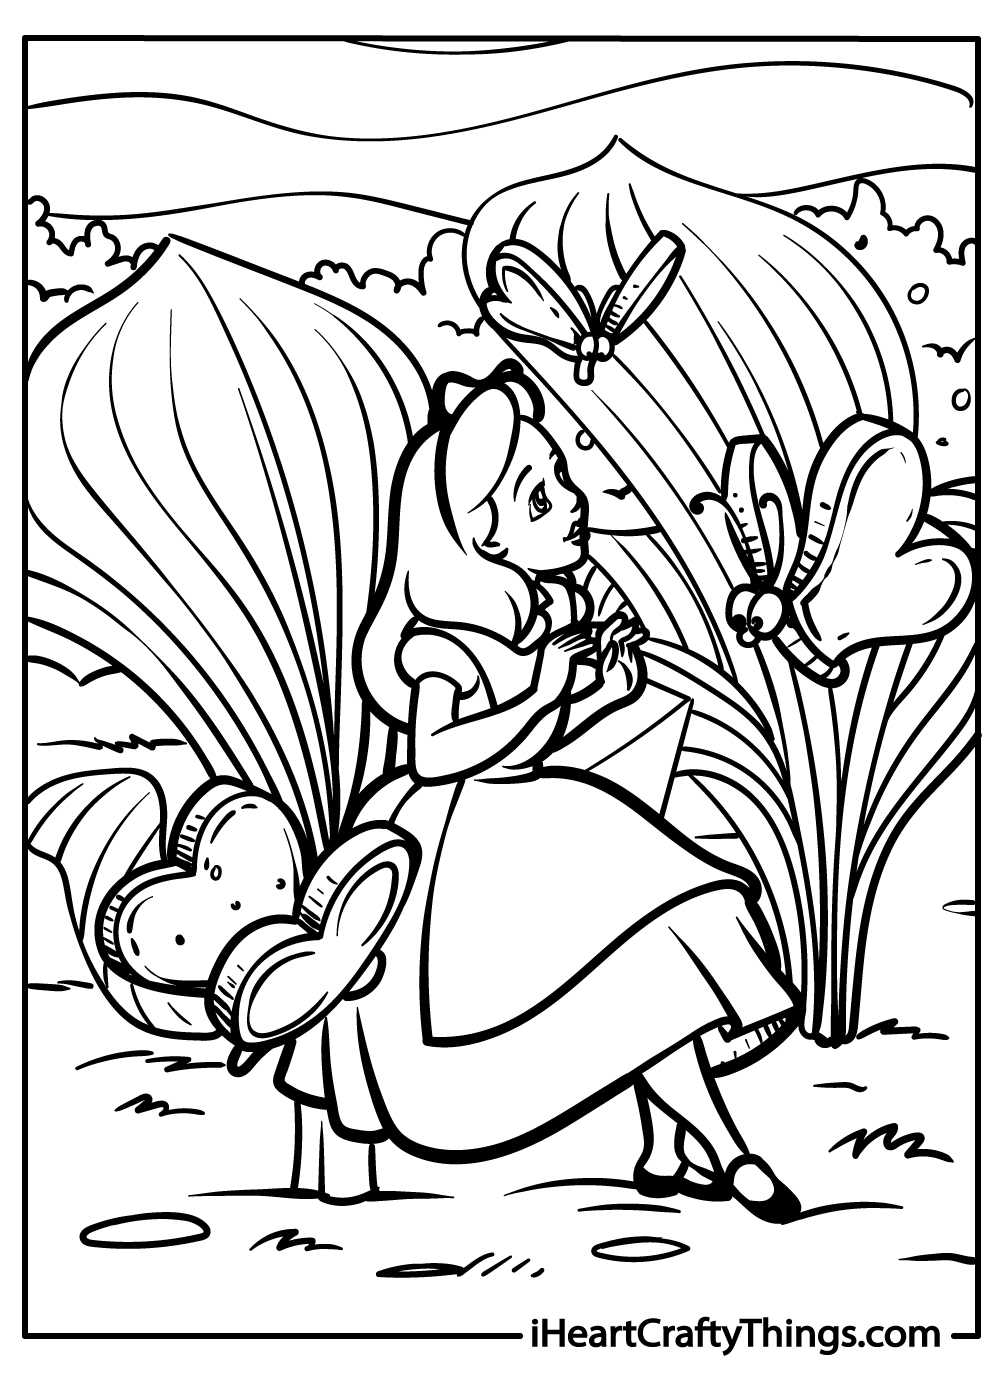 Alice in Wonderland coloring printable for kids